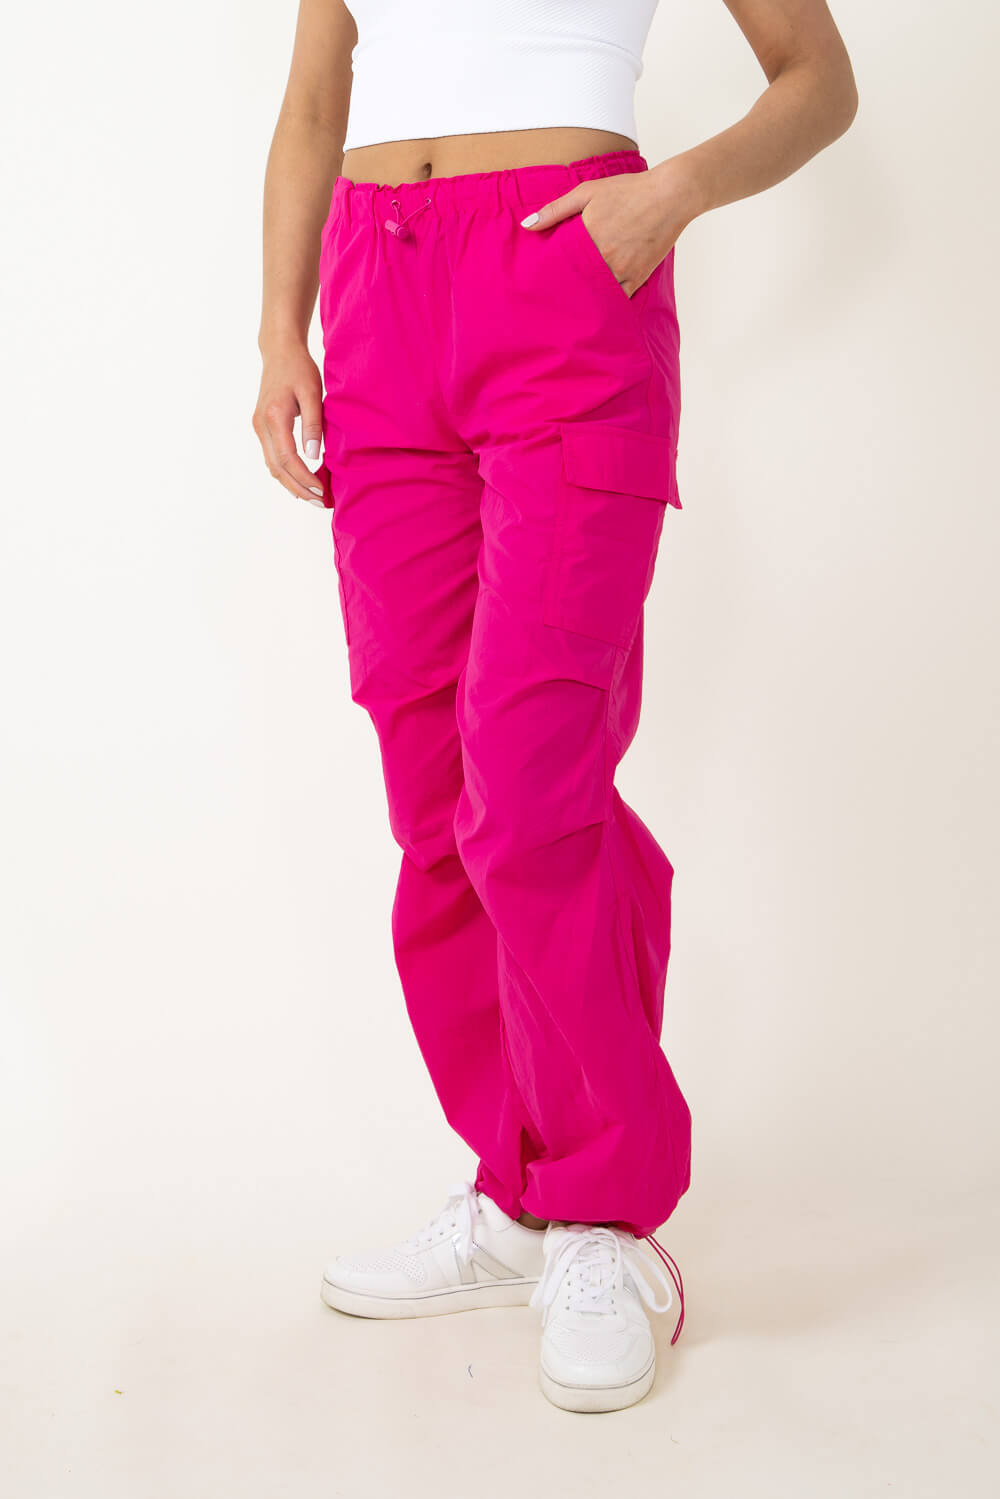 Satin Jogger Pants Hot Pink - Southern Fashion Boutique Bliss